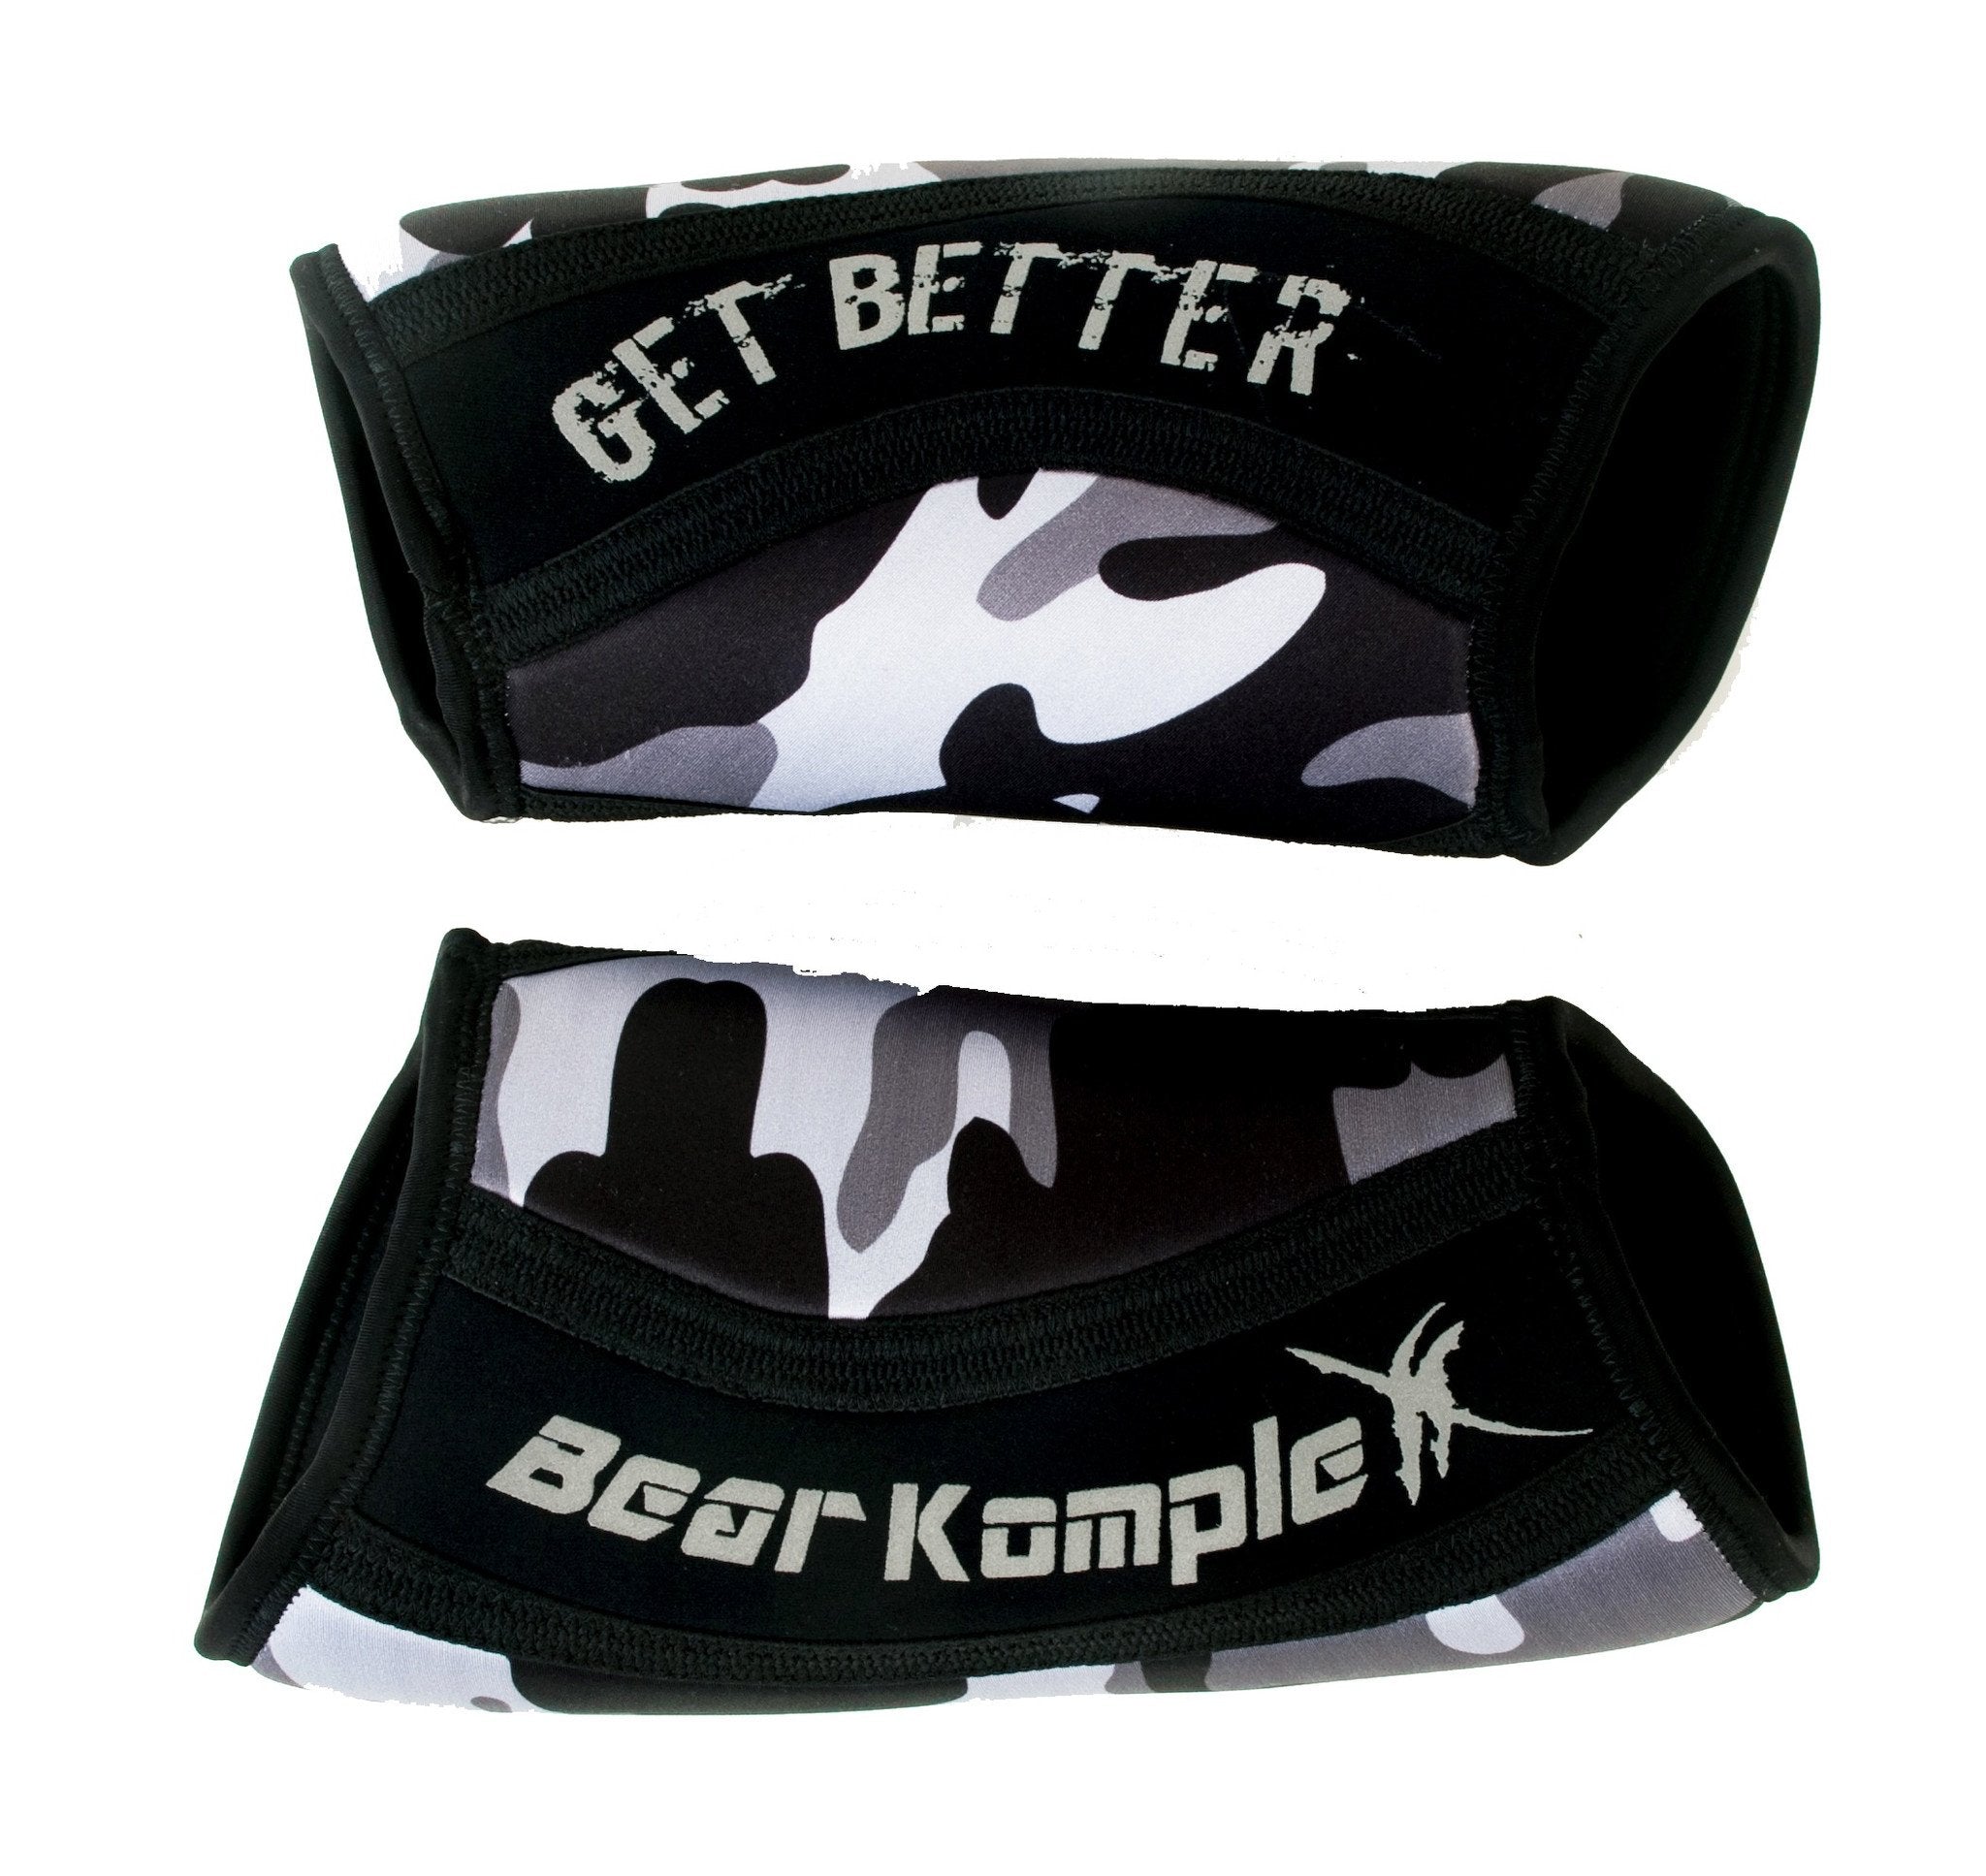 Bear KompleX Knee Sleeves 5&7mm - Black Camo from Bear Komplex for Genejack WOD